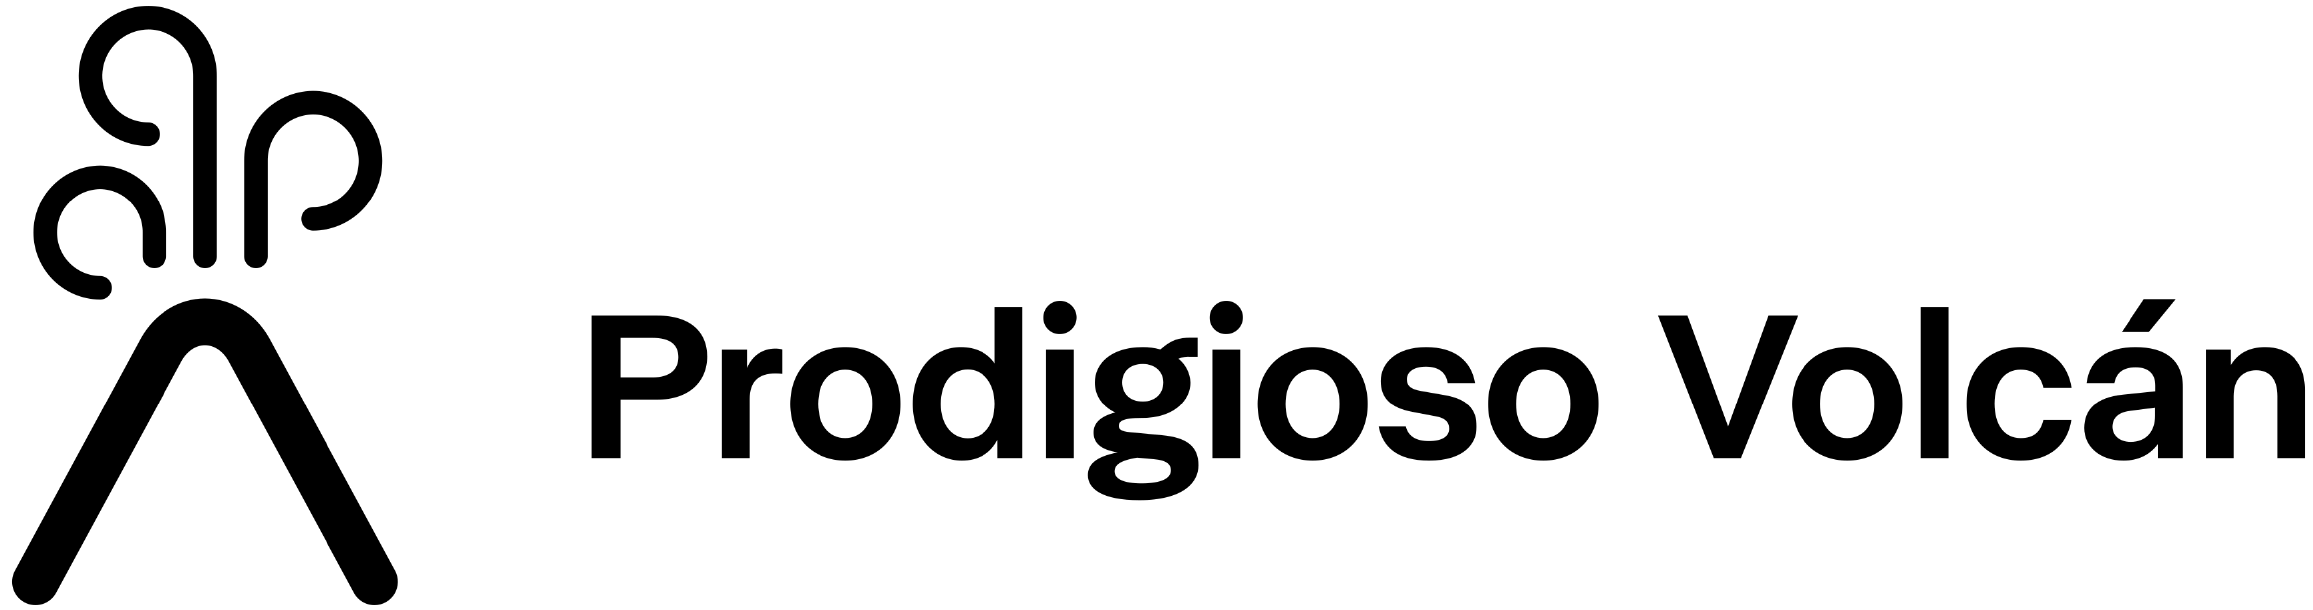 Logotipo Prodigioso Volcán
